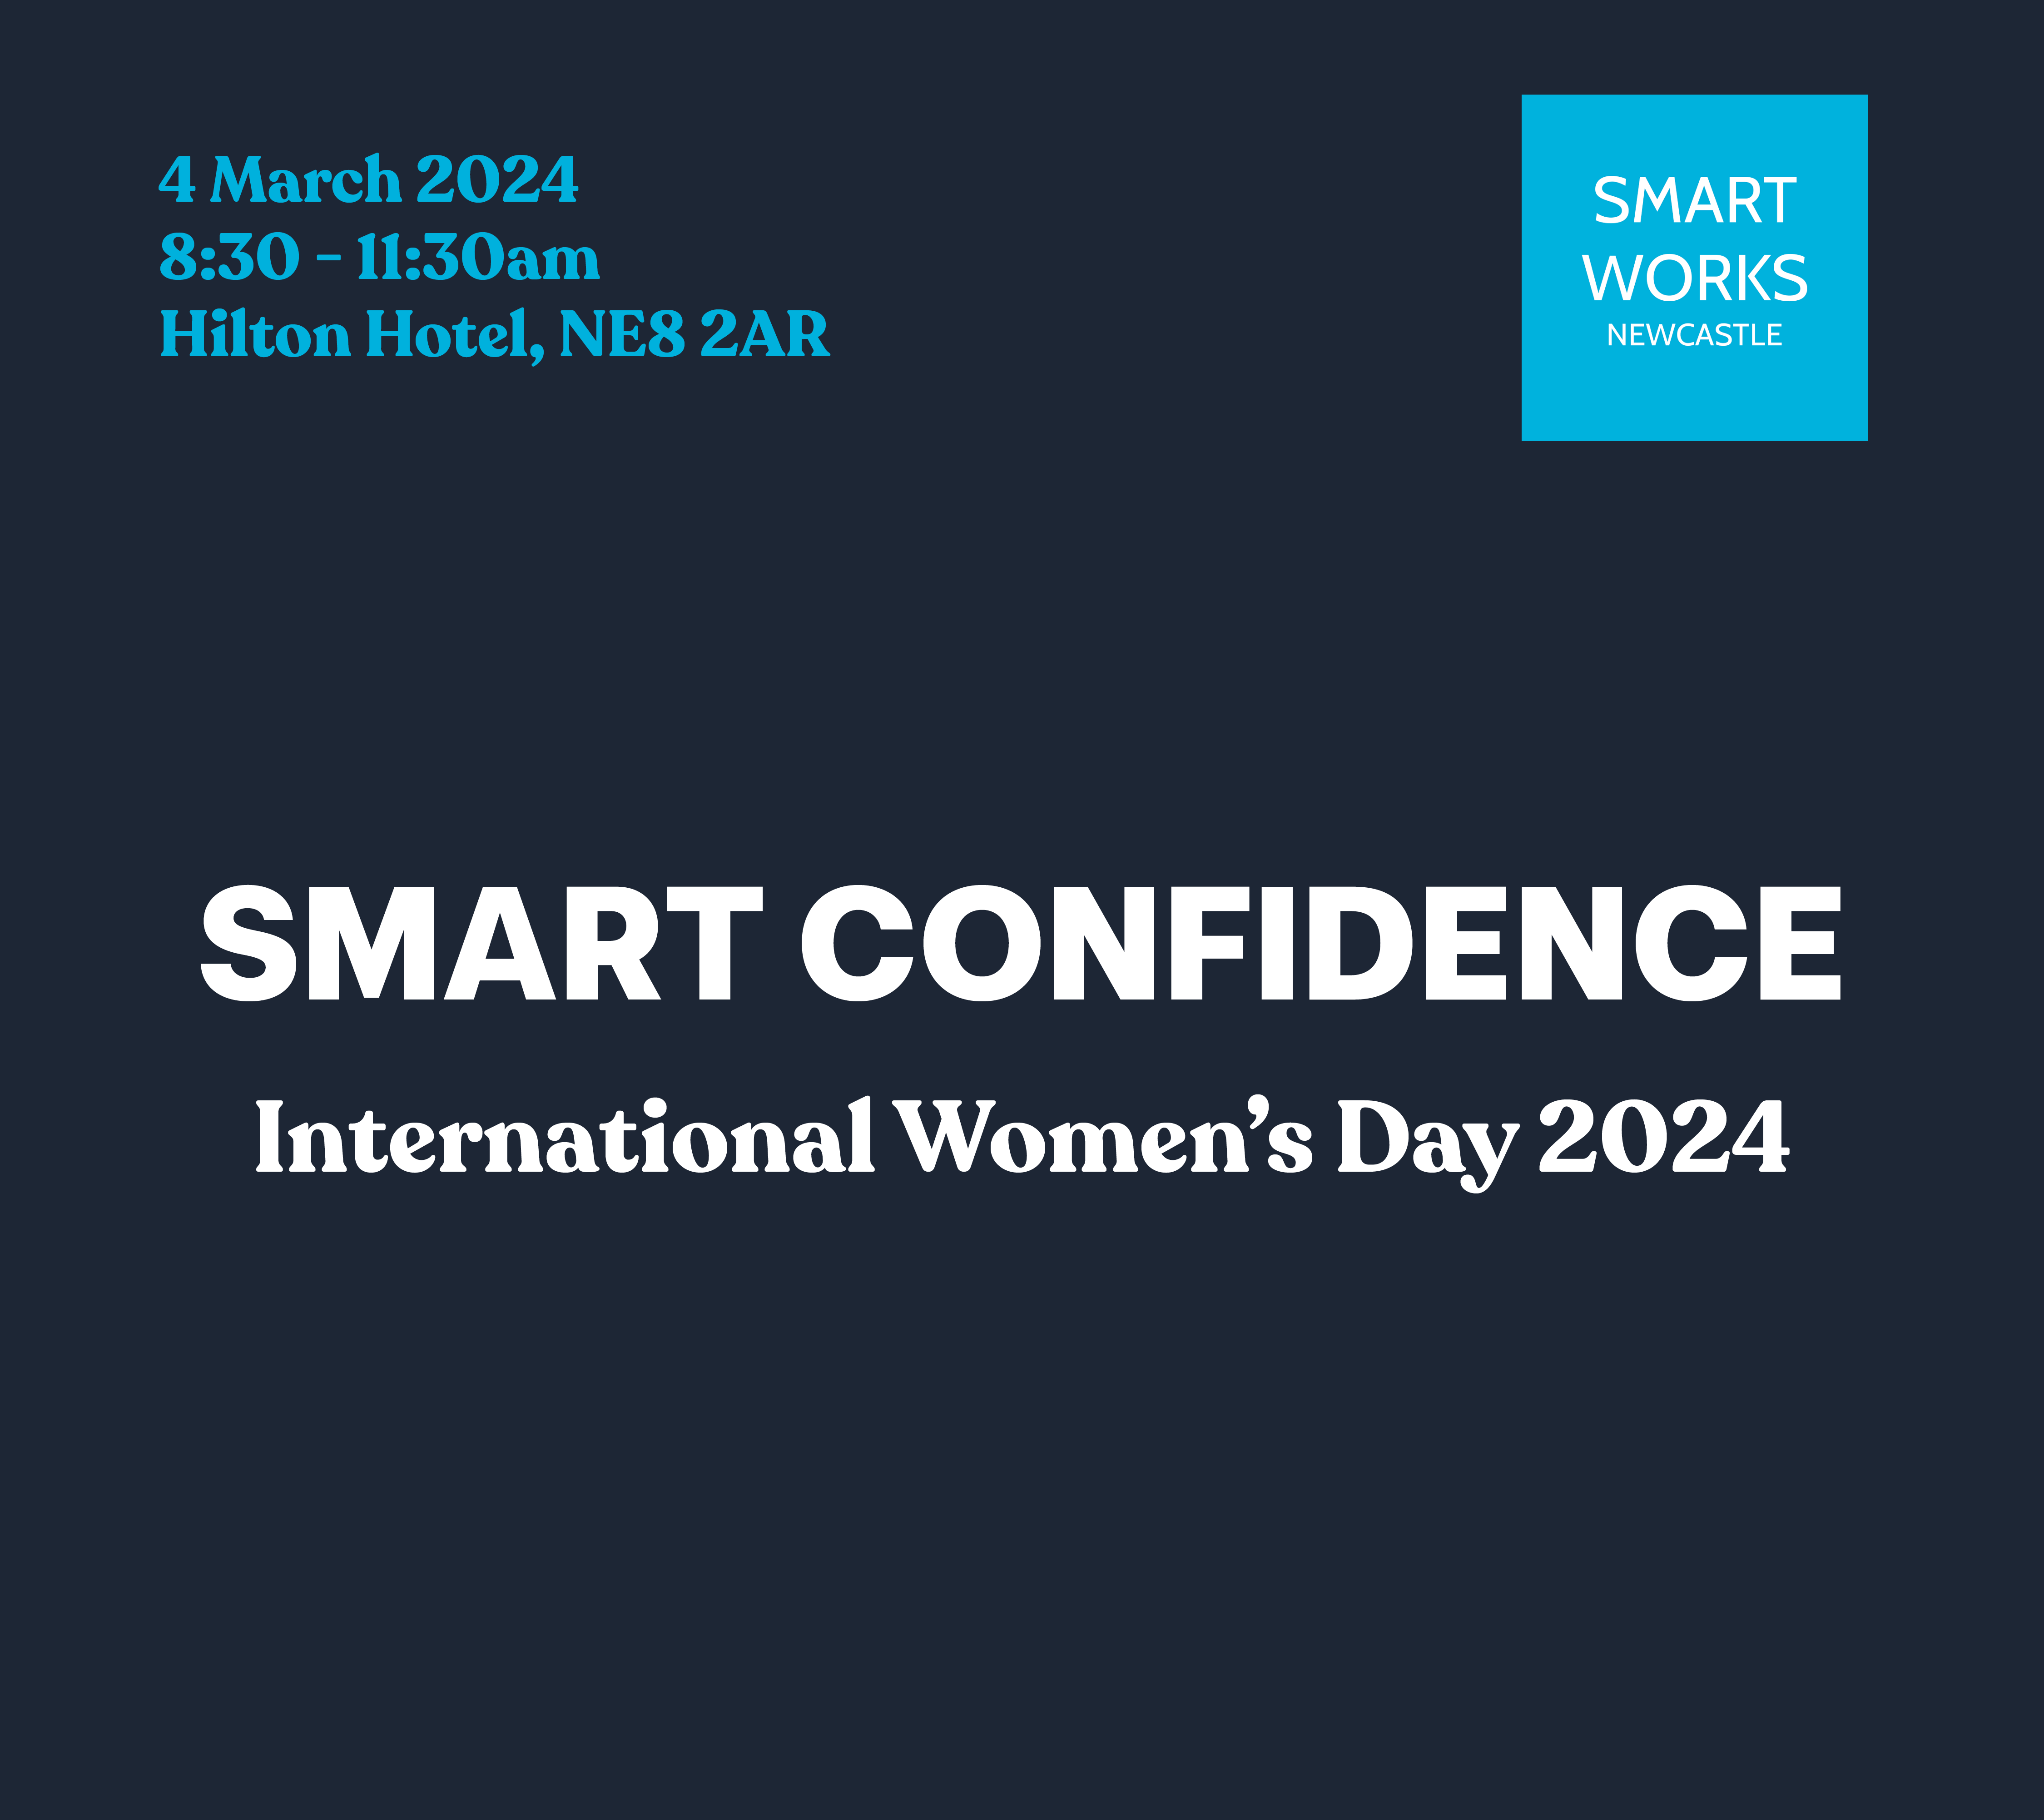 SMART CONFIDENCE. International Women’s Day Breakfast Event. image